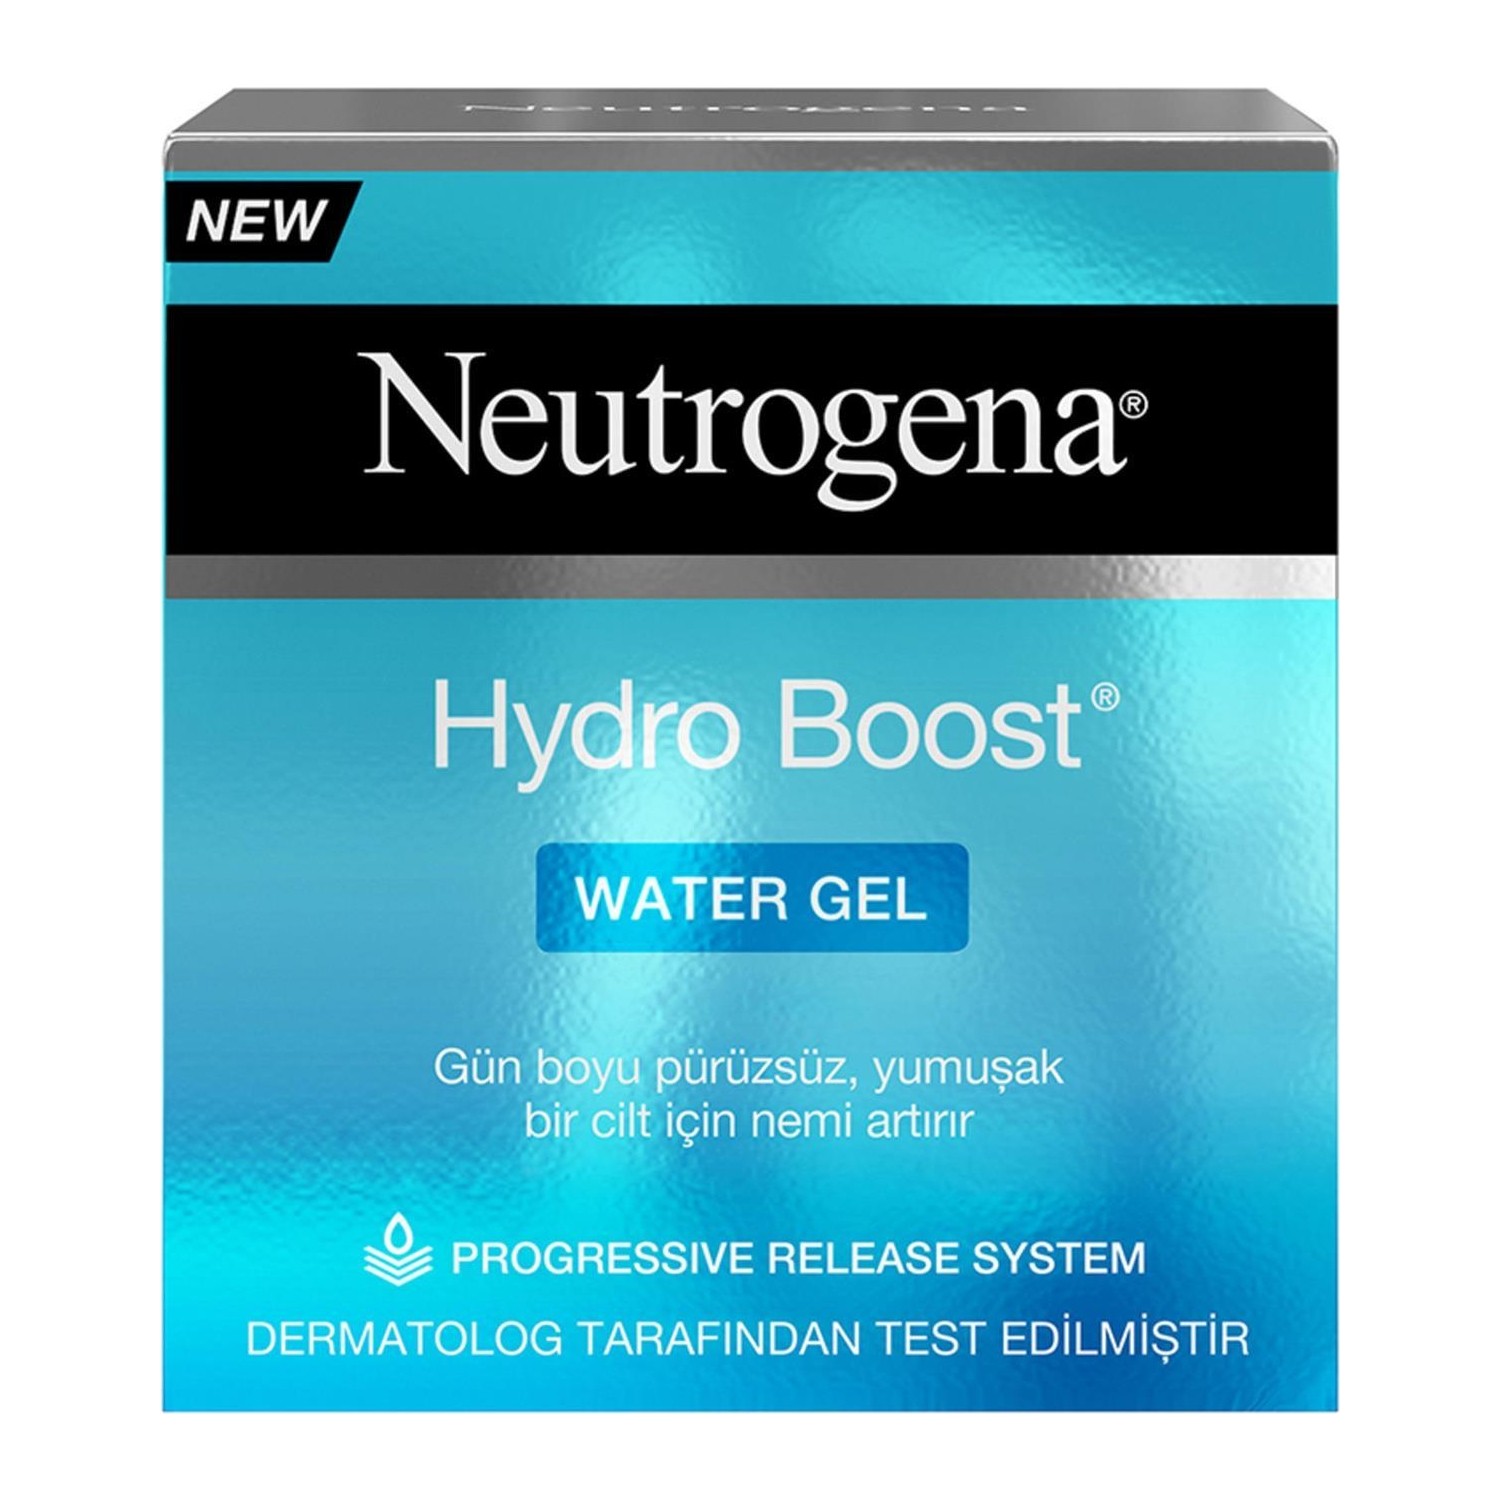 Крем увлажняющий Neutrogena Hydro Boost Water Gel для нормальной кожи, 50 мл крем увлажняющий neutrogena hydro boost water gel для нормальной кожи 50 мл